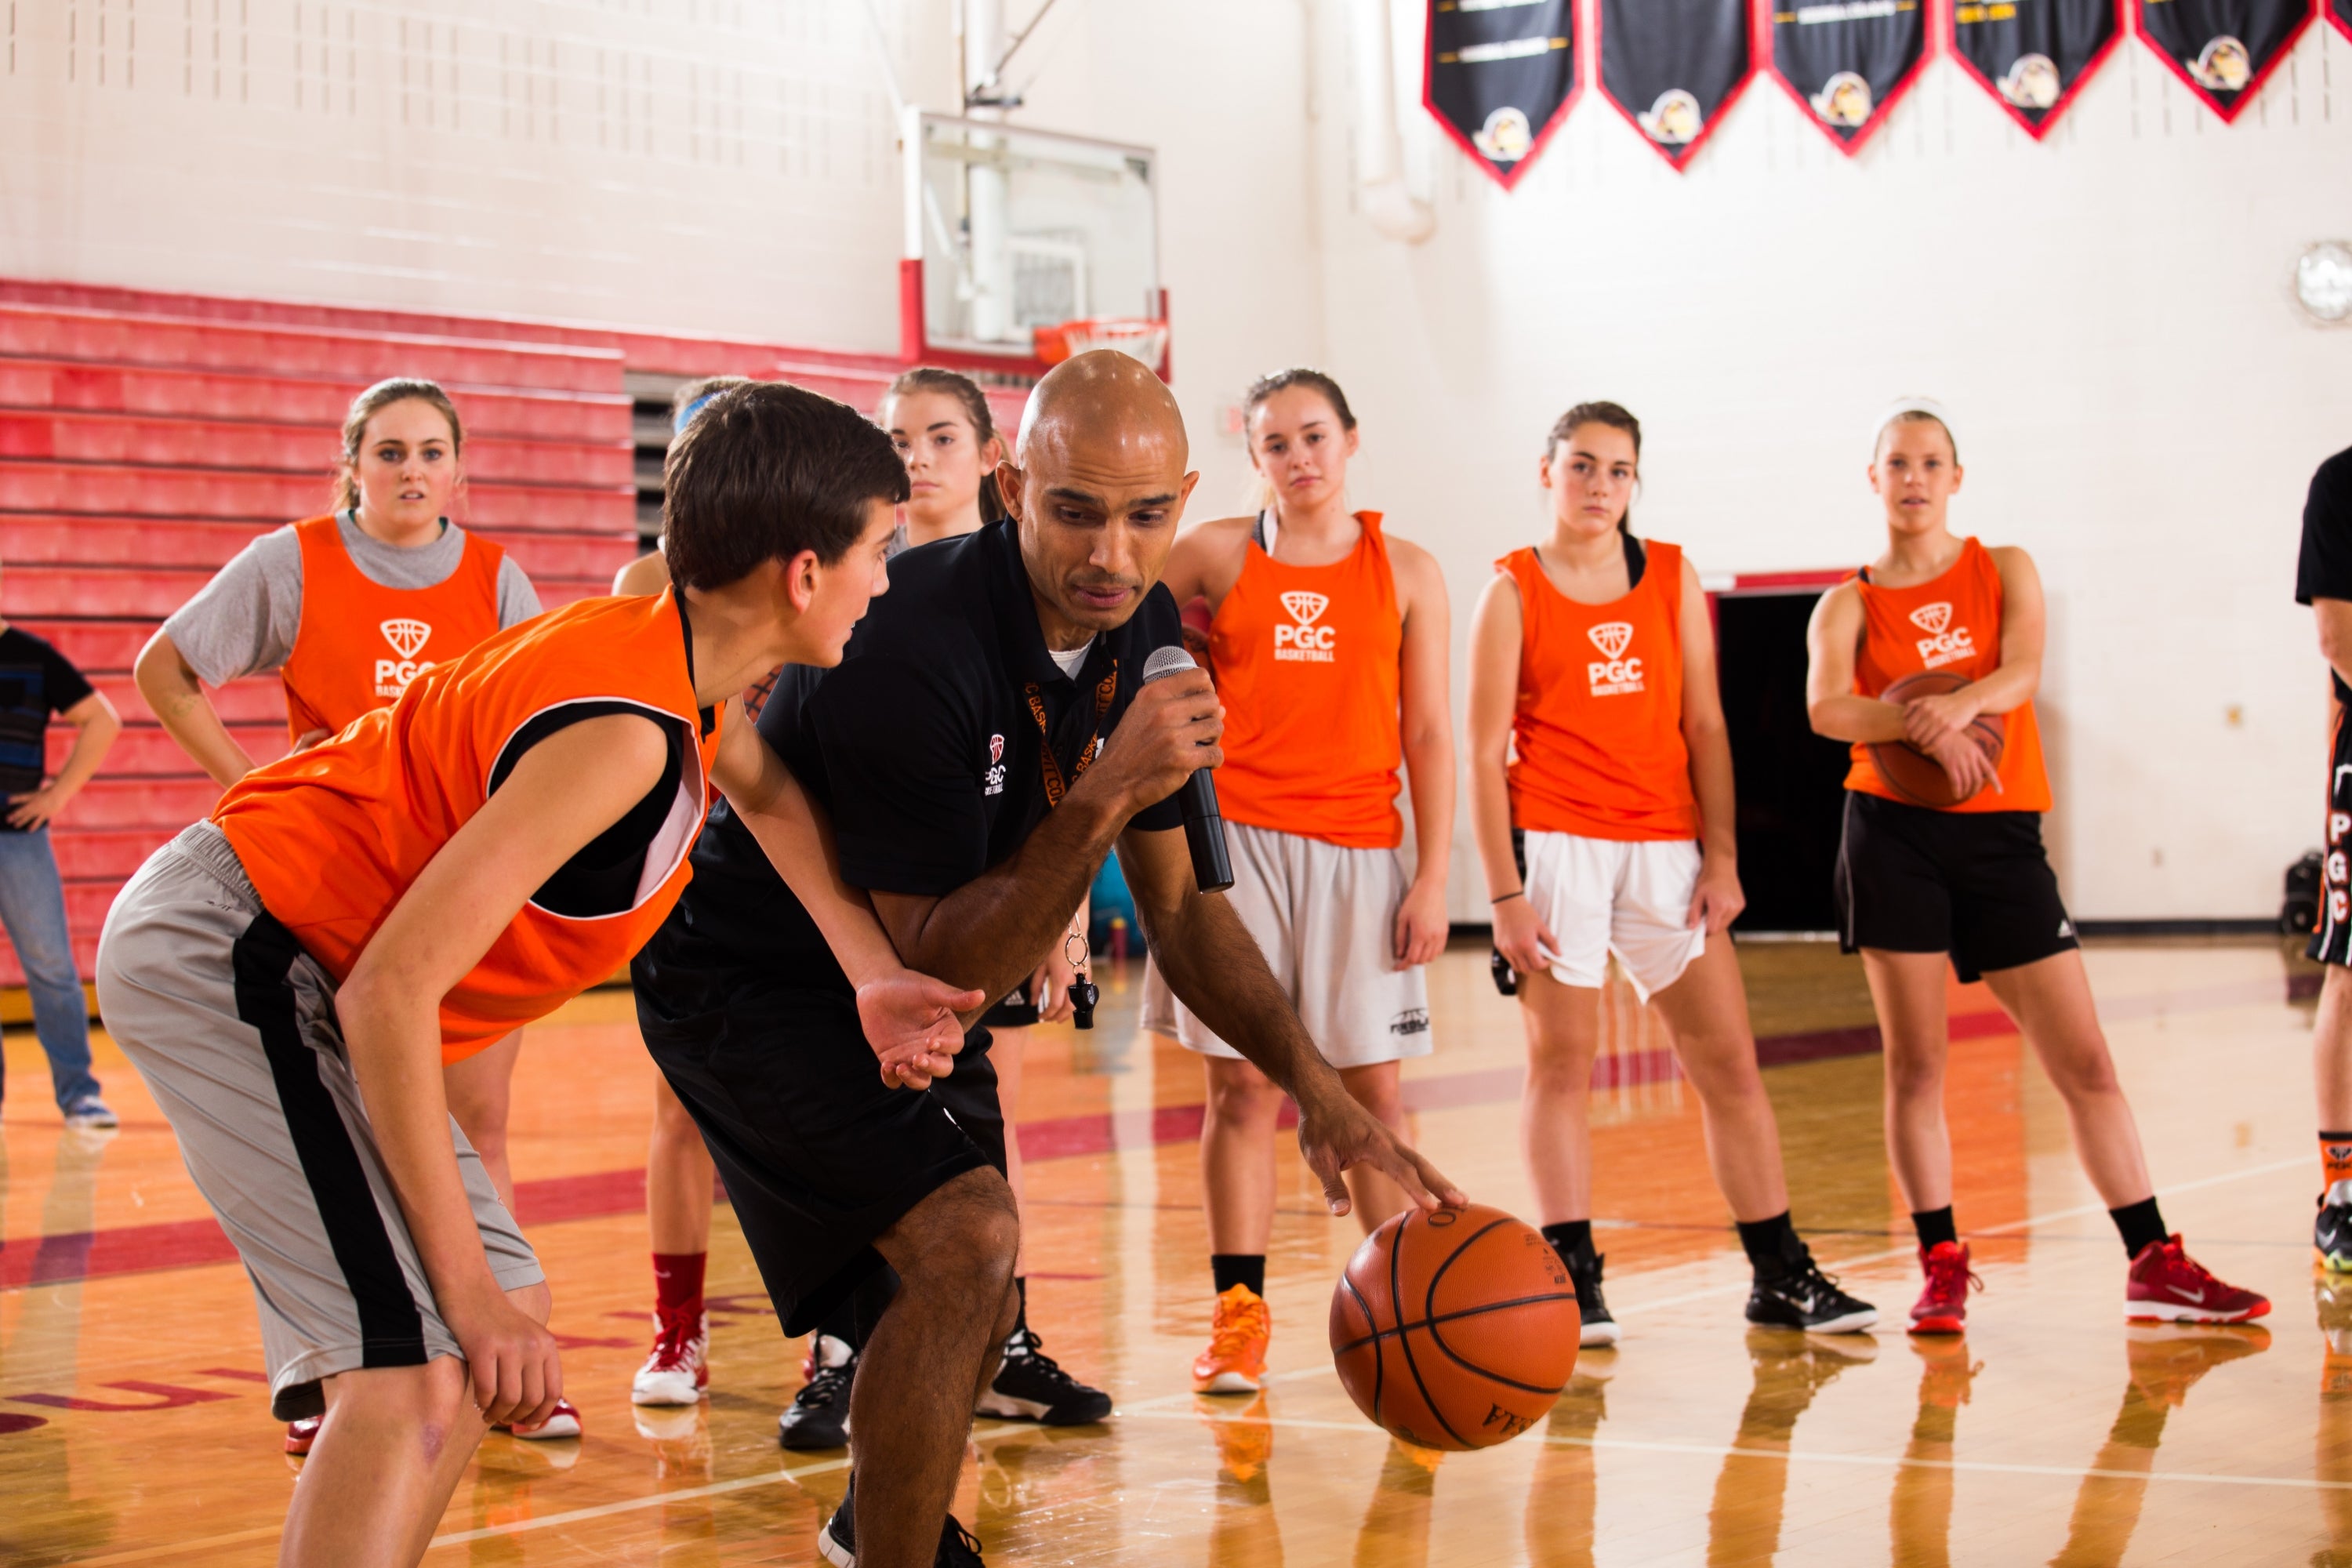 Mano teaching basketball